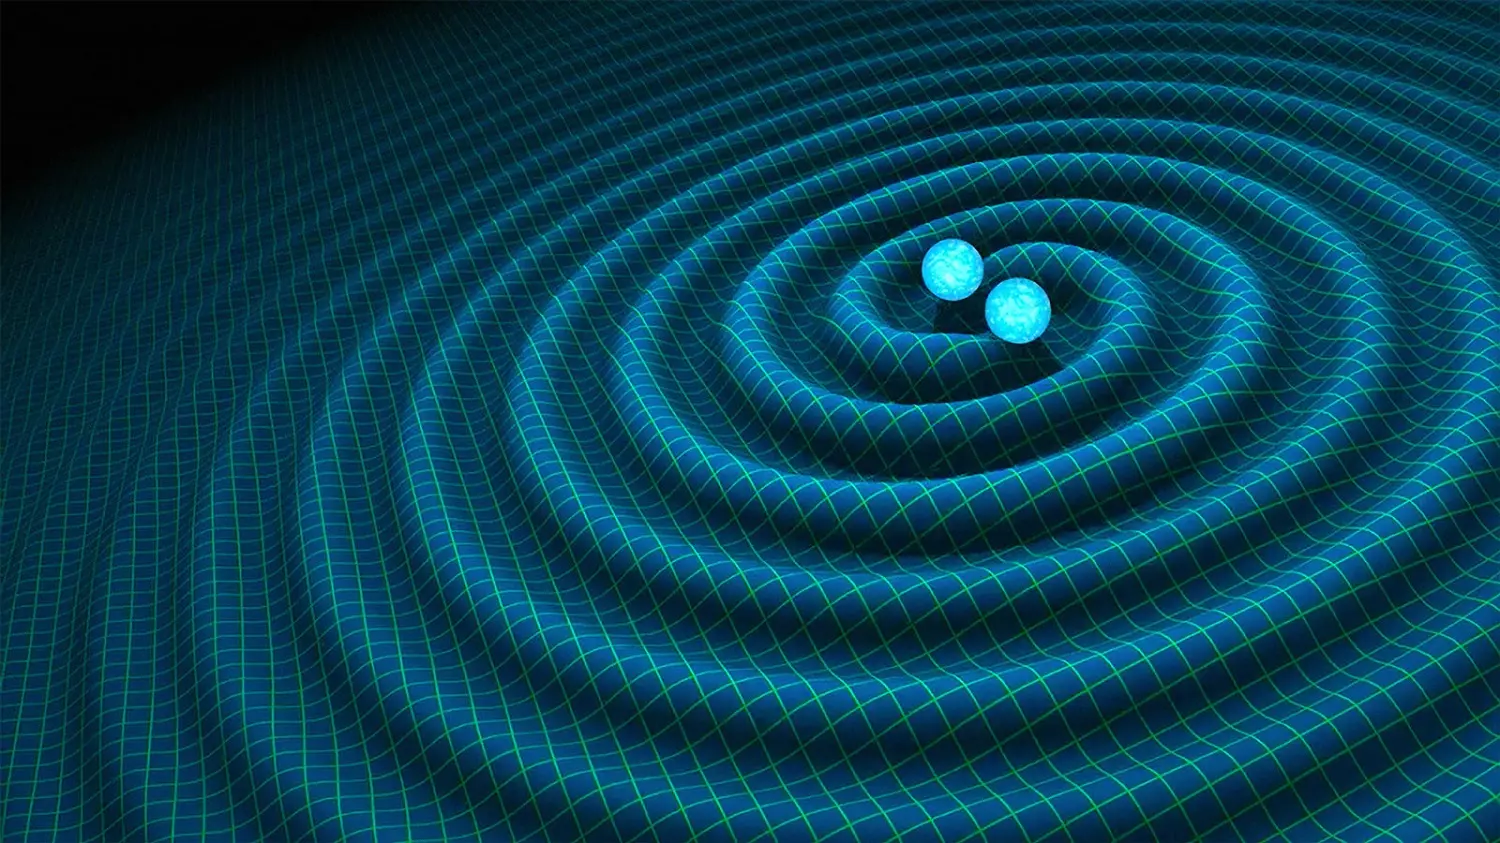 artist's grid showing gravitational waves around two circling stars, photo credit: NASA